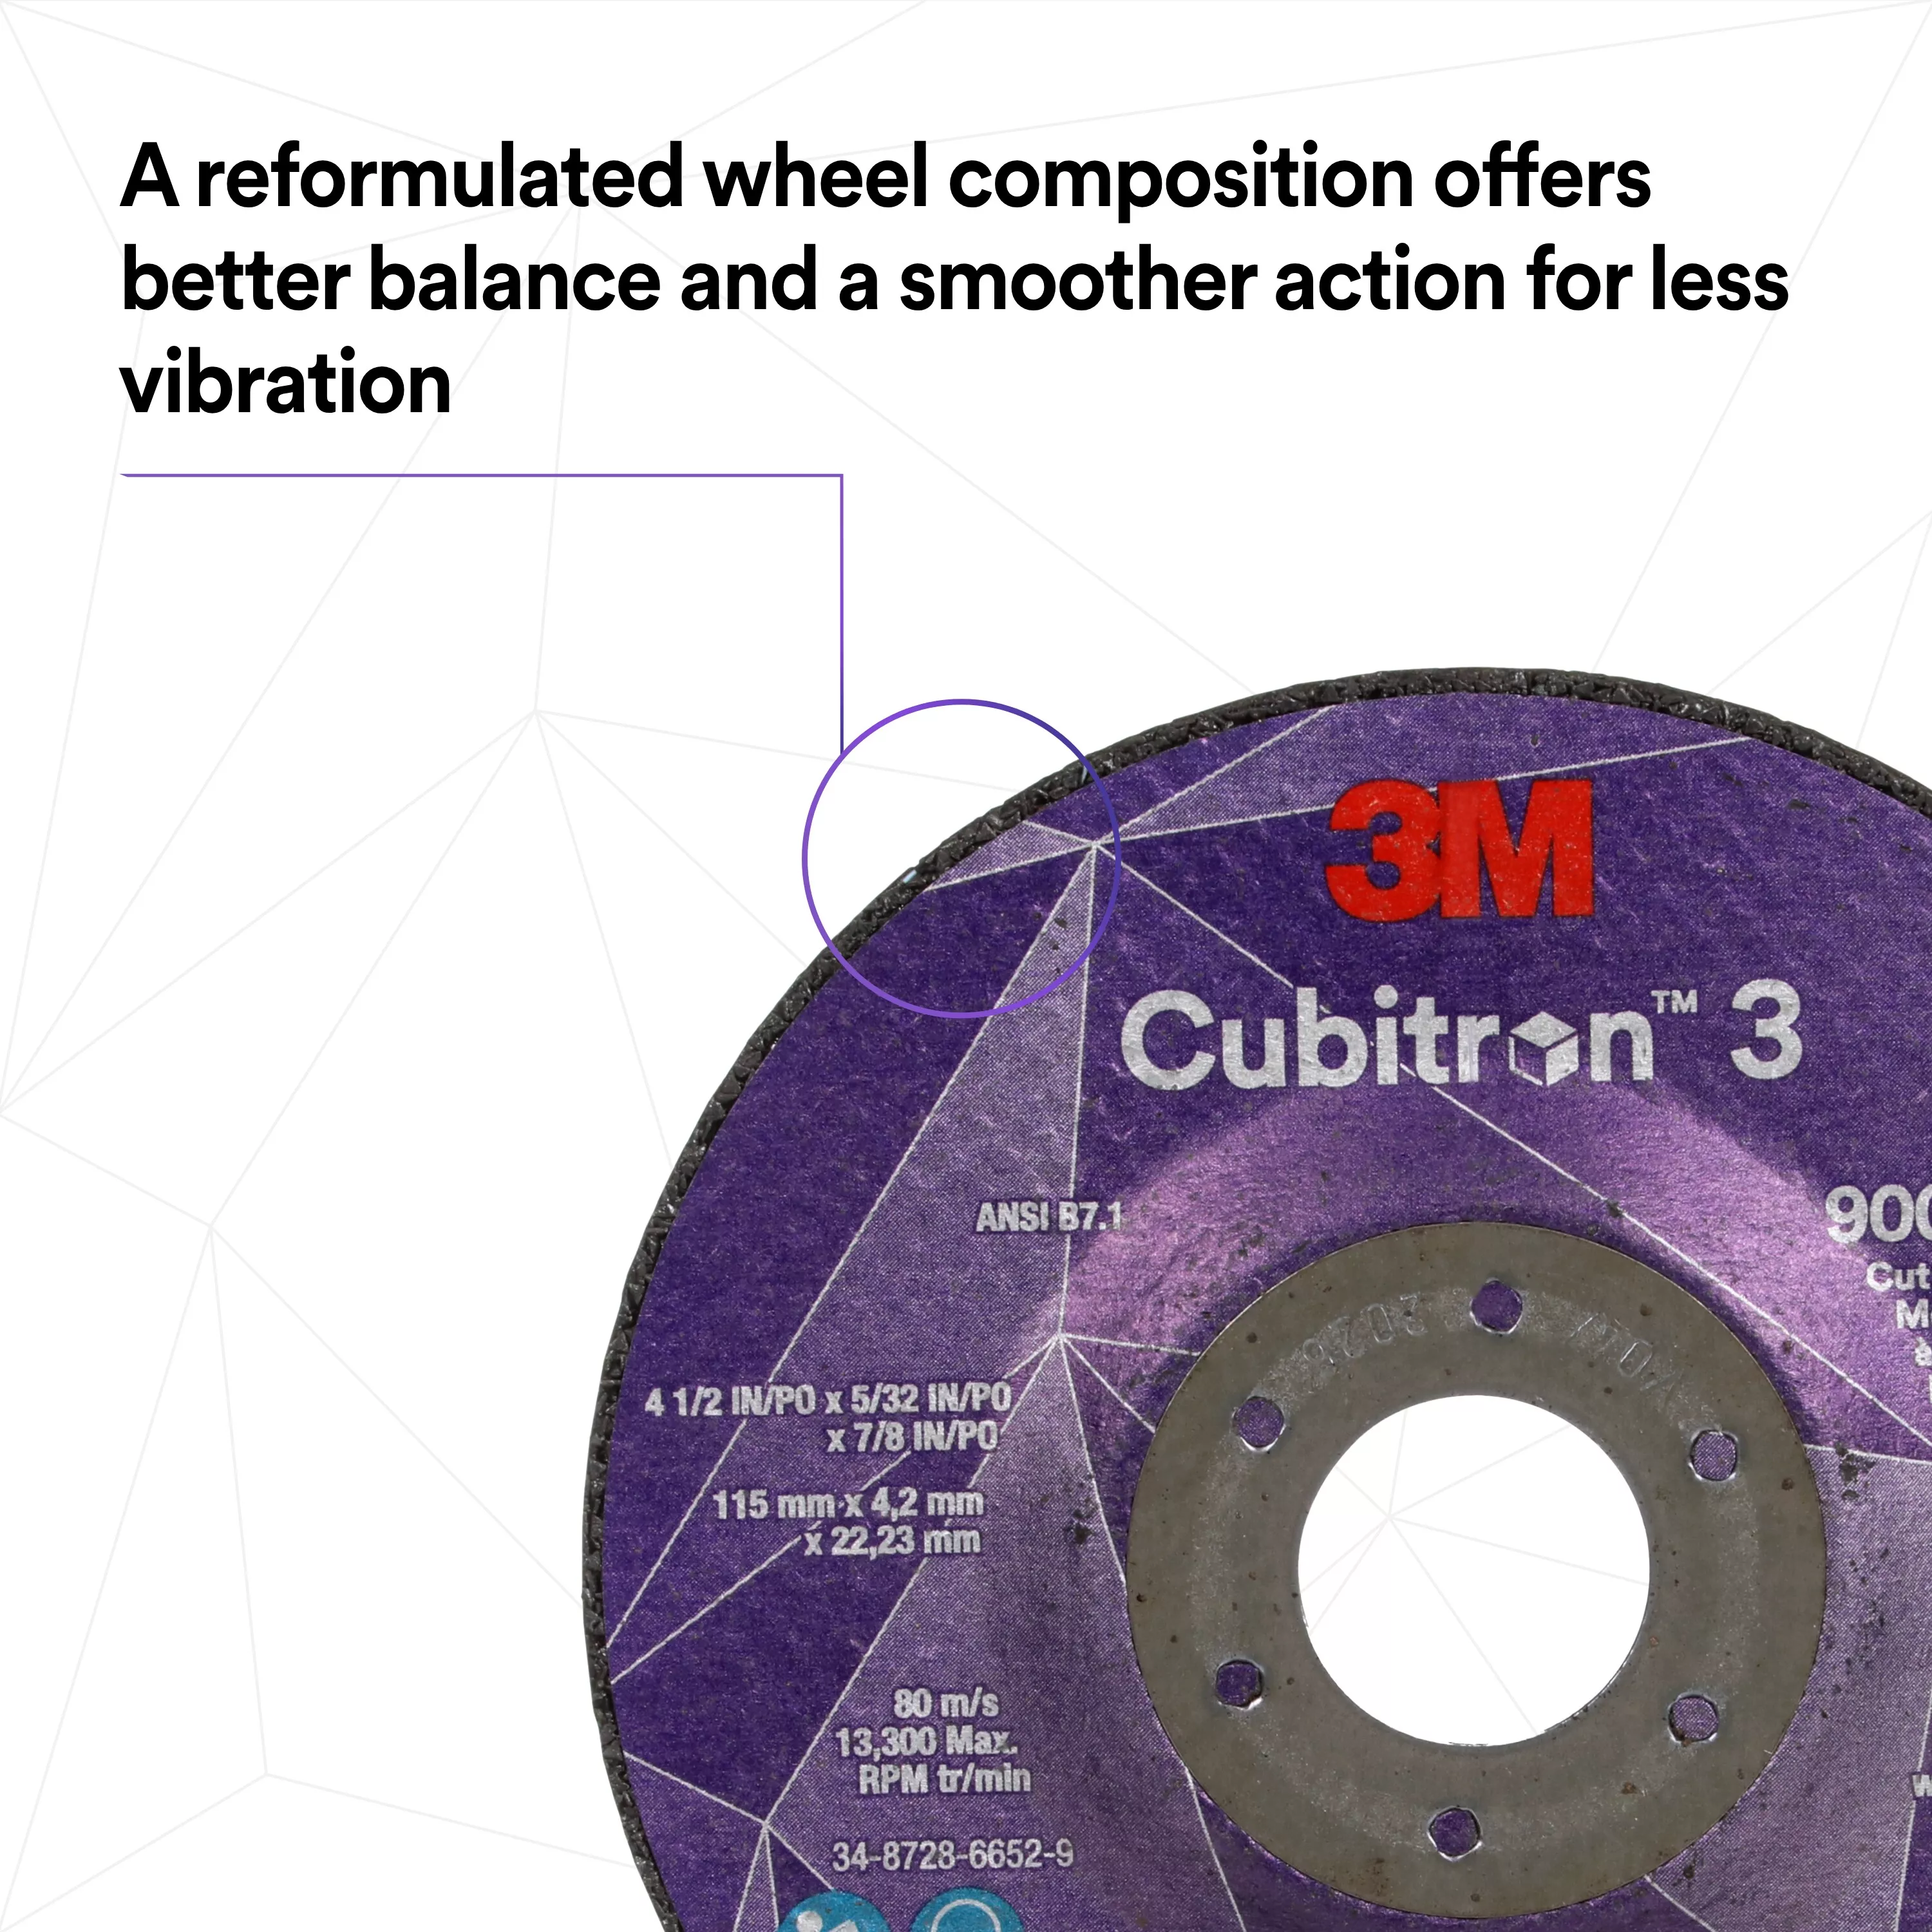 SKU 7100303968 | 3M™ Cubitron™ 3 Cut and Grind Wheel